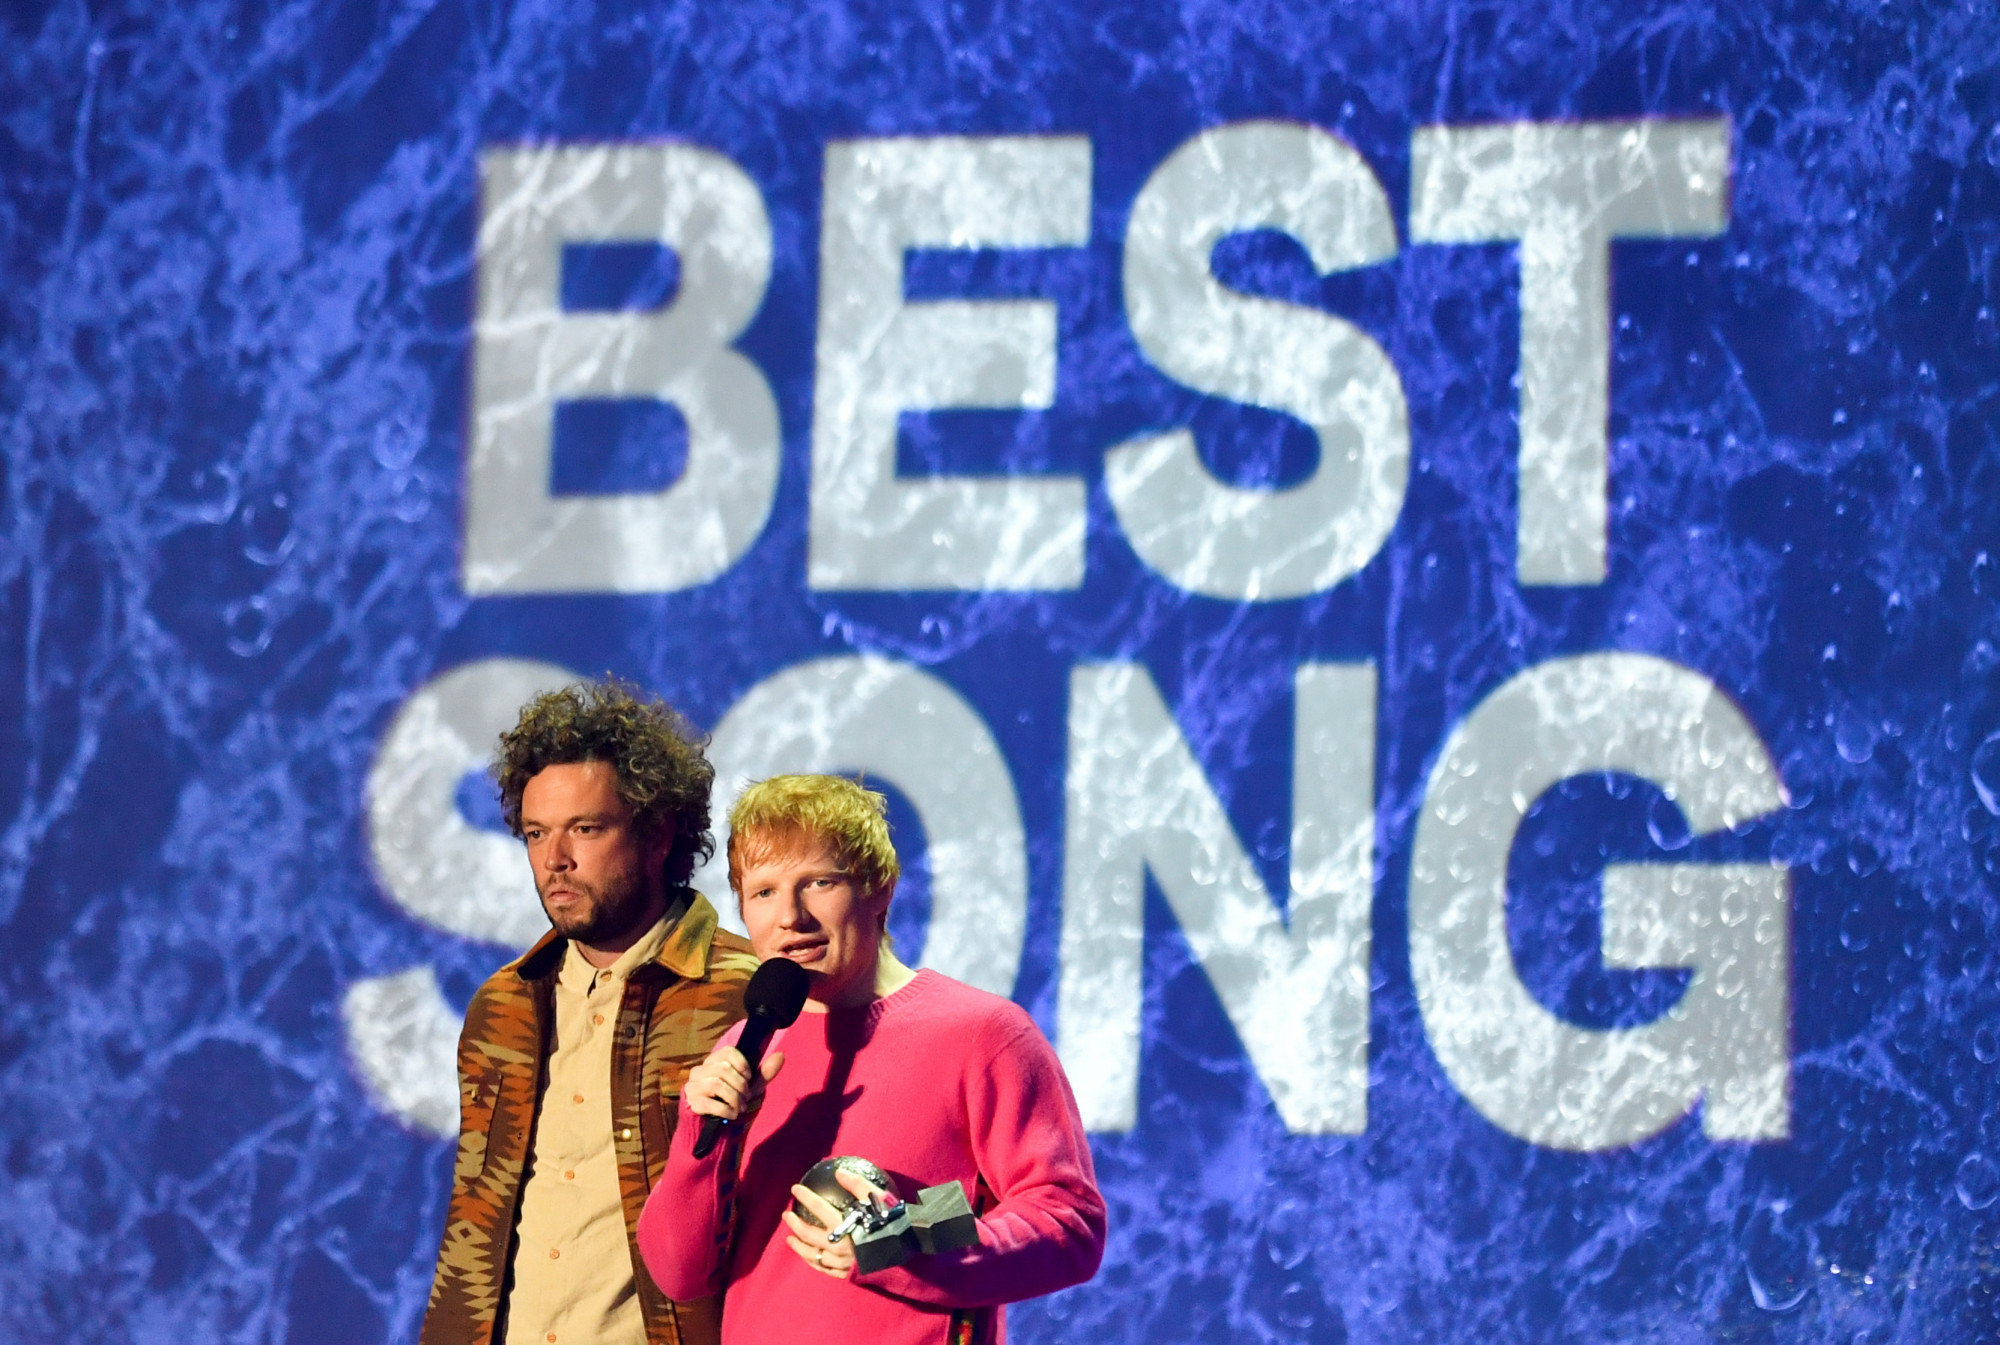 Ca sĩ Ed Sheeran trên sân khấu nhận giải Bài hát hay nhất.